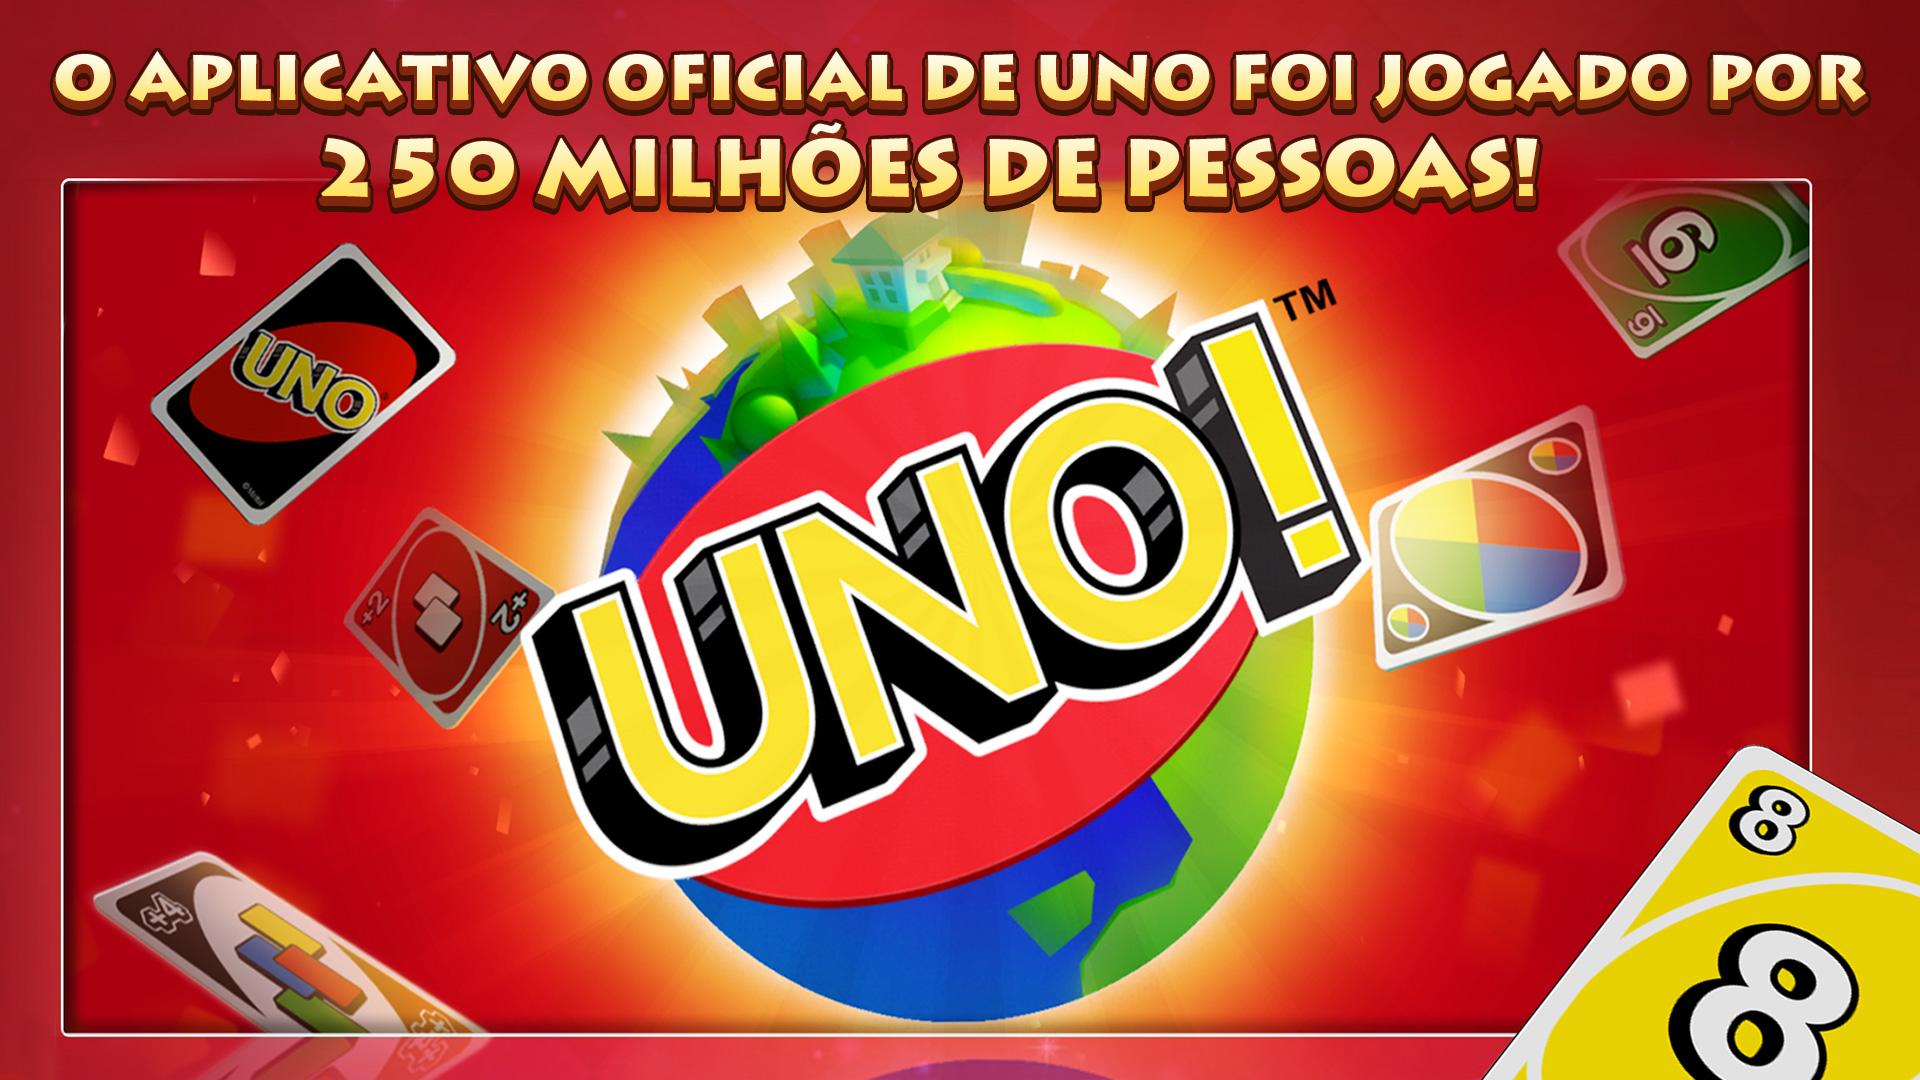 Uno & Friends: como jogar o divertido game de cartas para smartphones